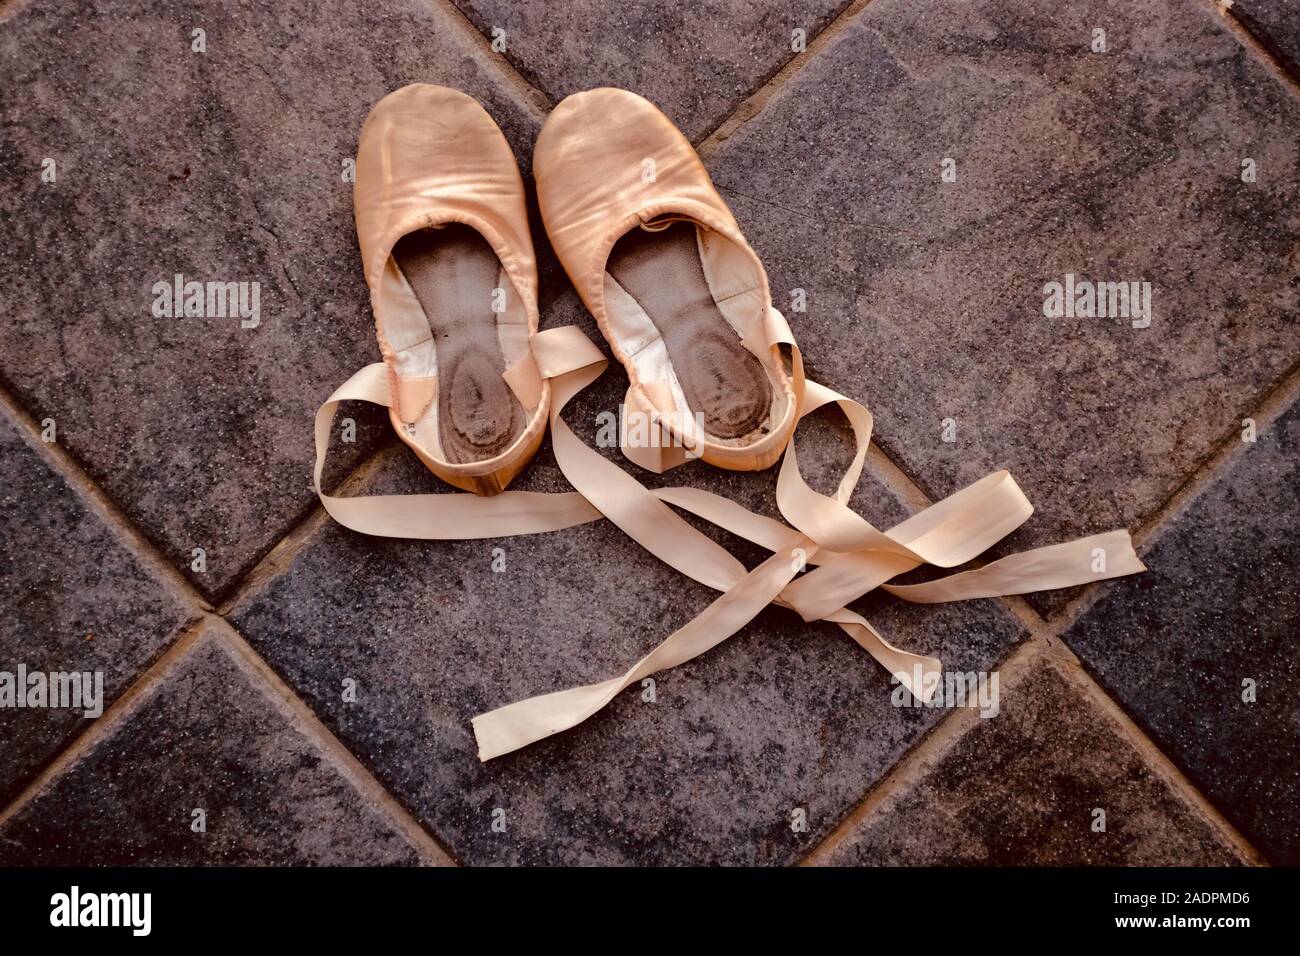 ballet shoes Stock Photo